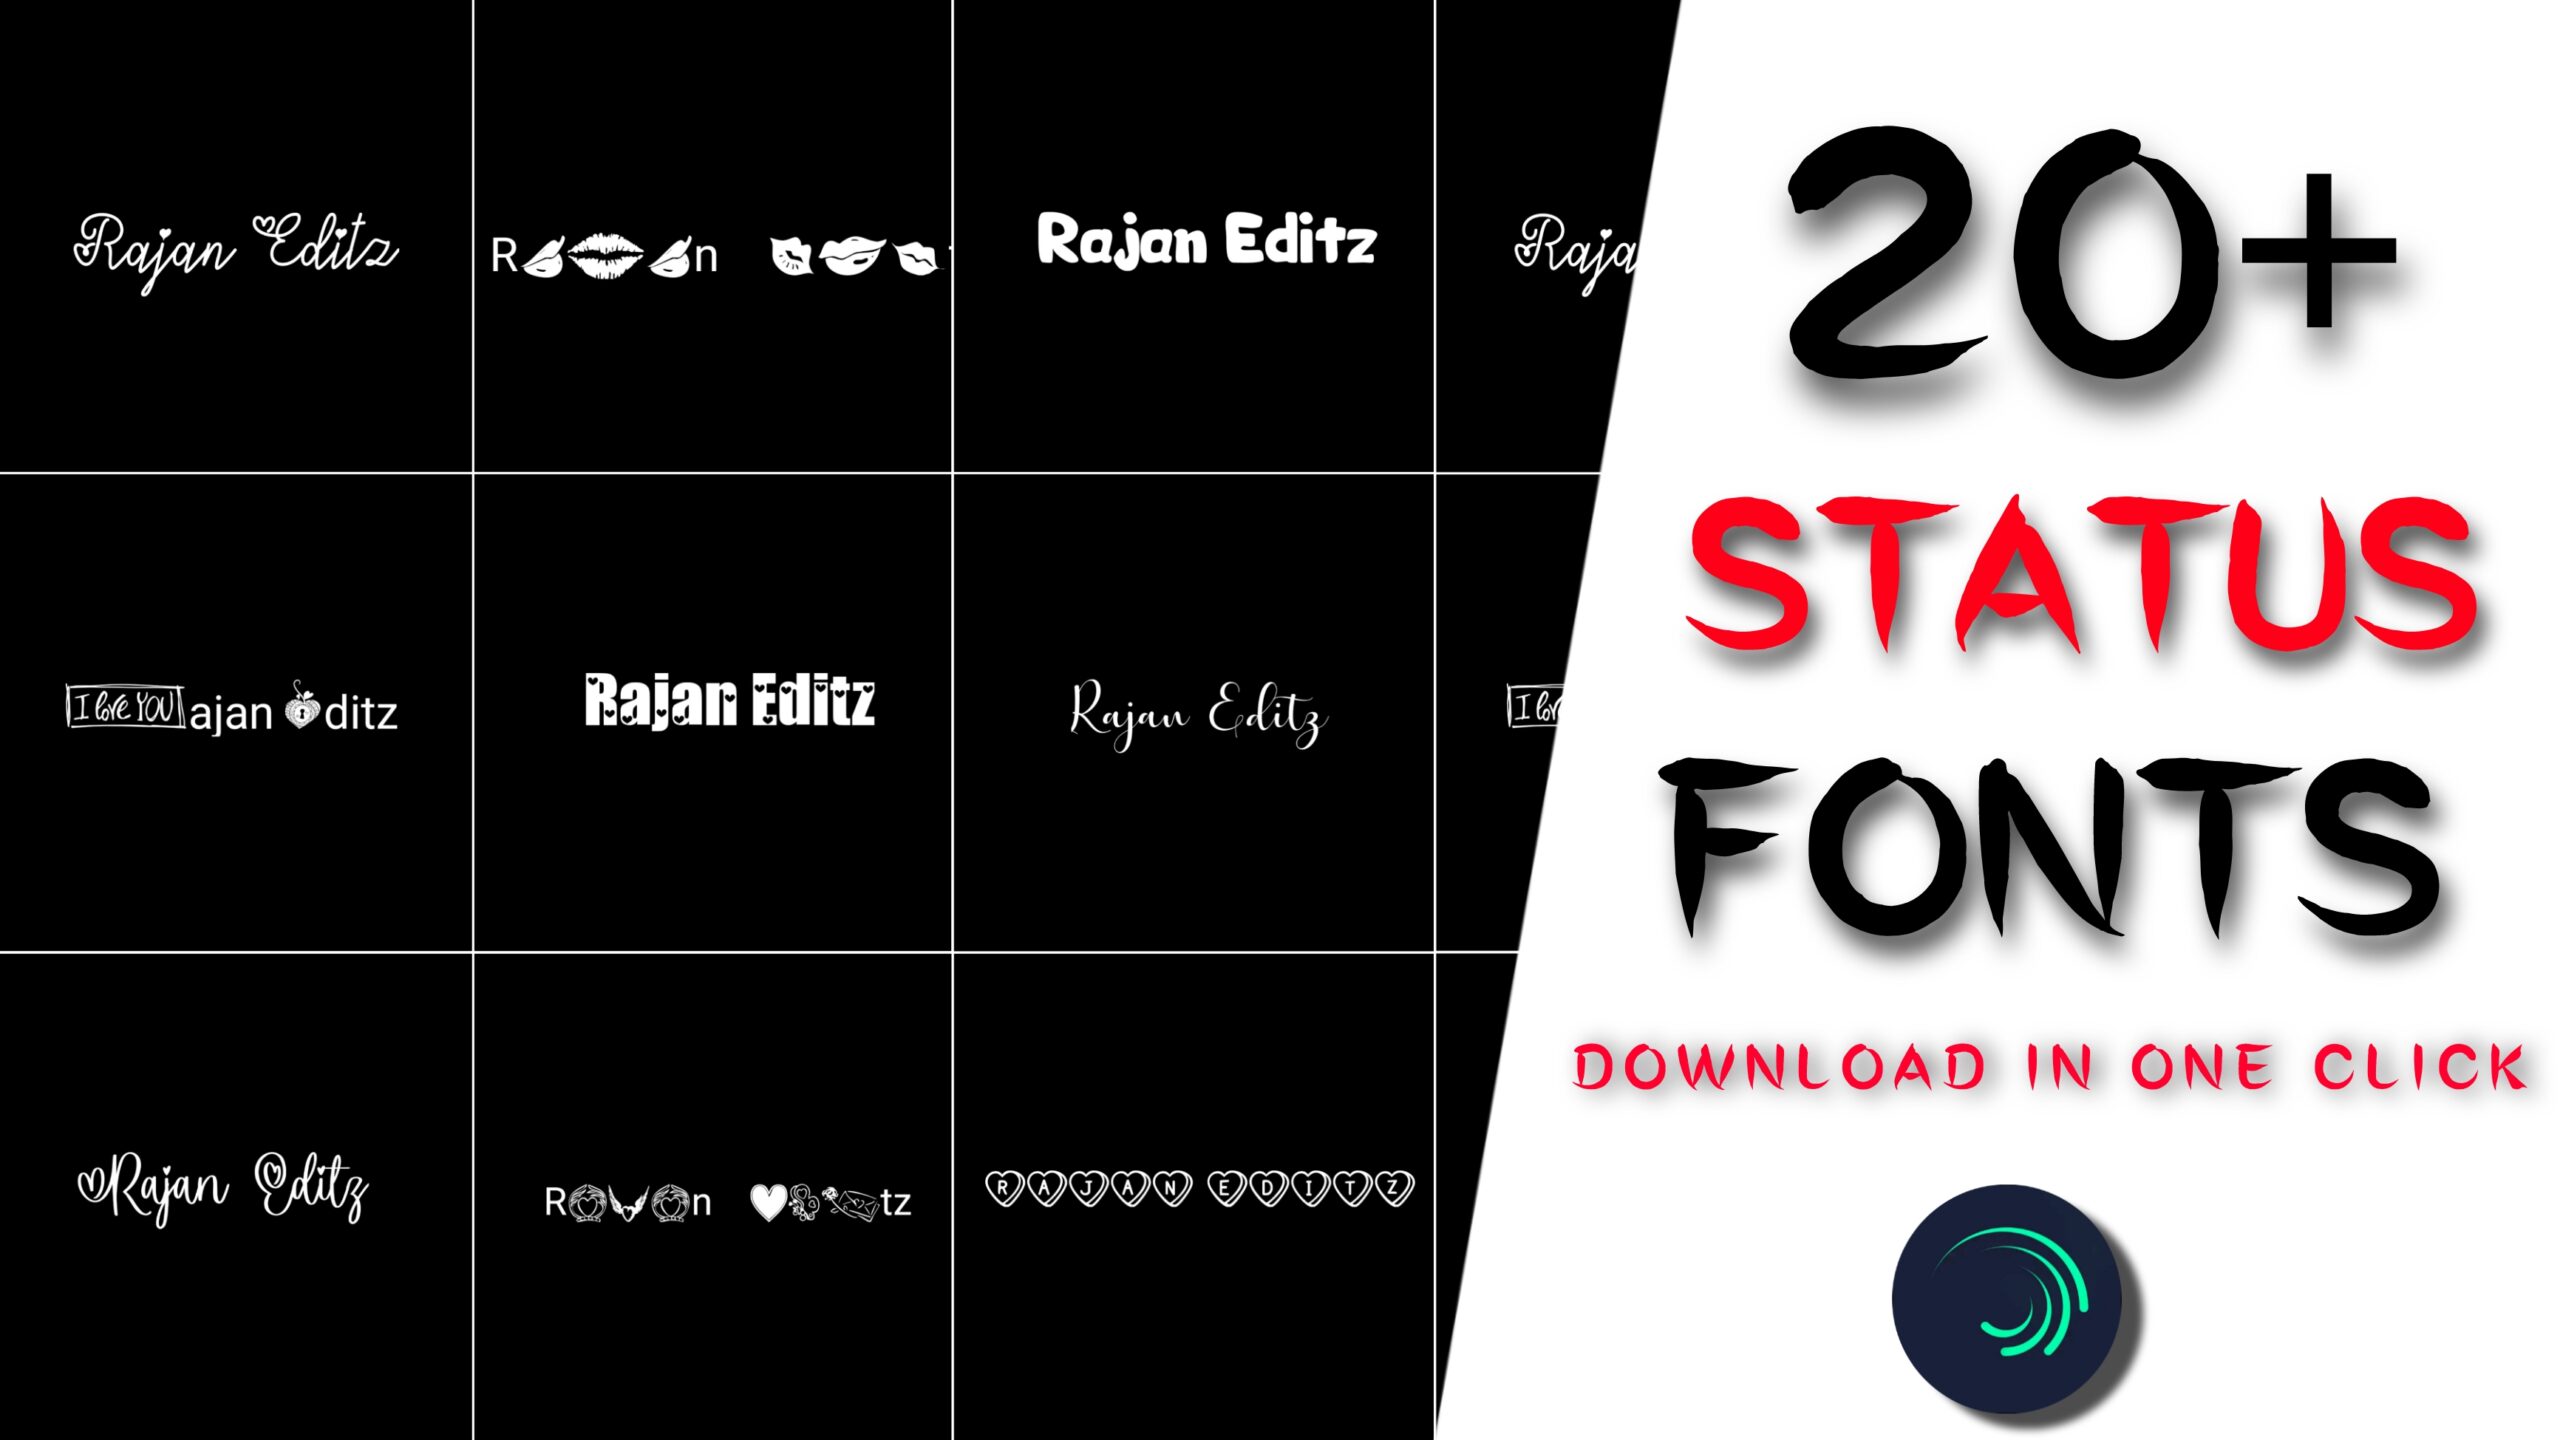 20+ status fonts download